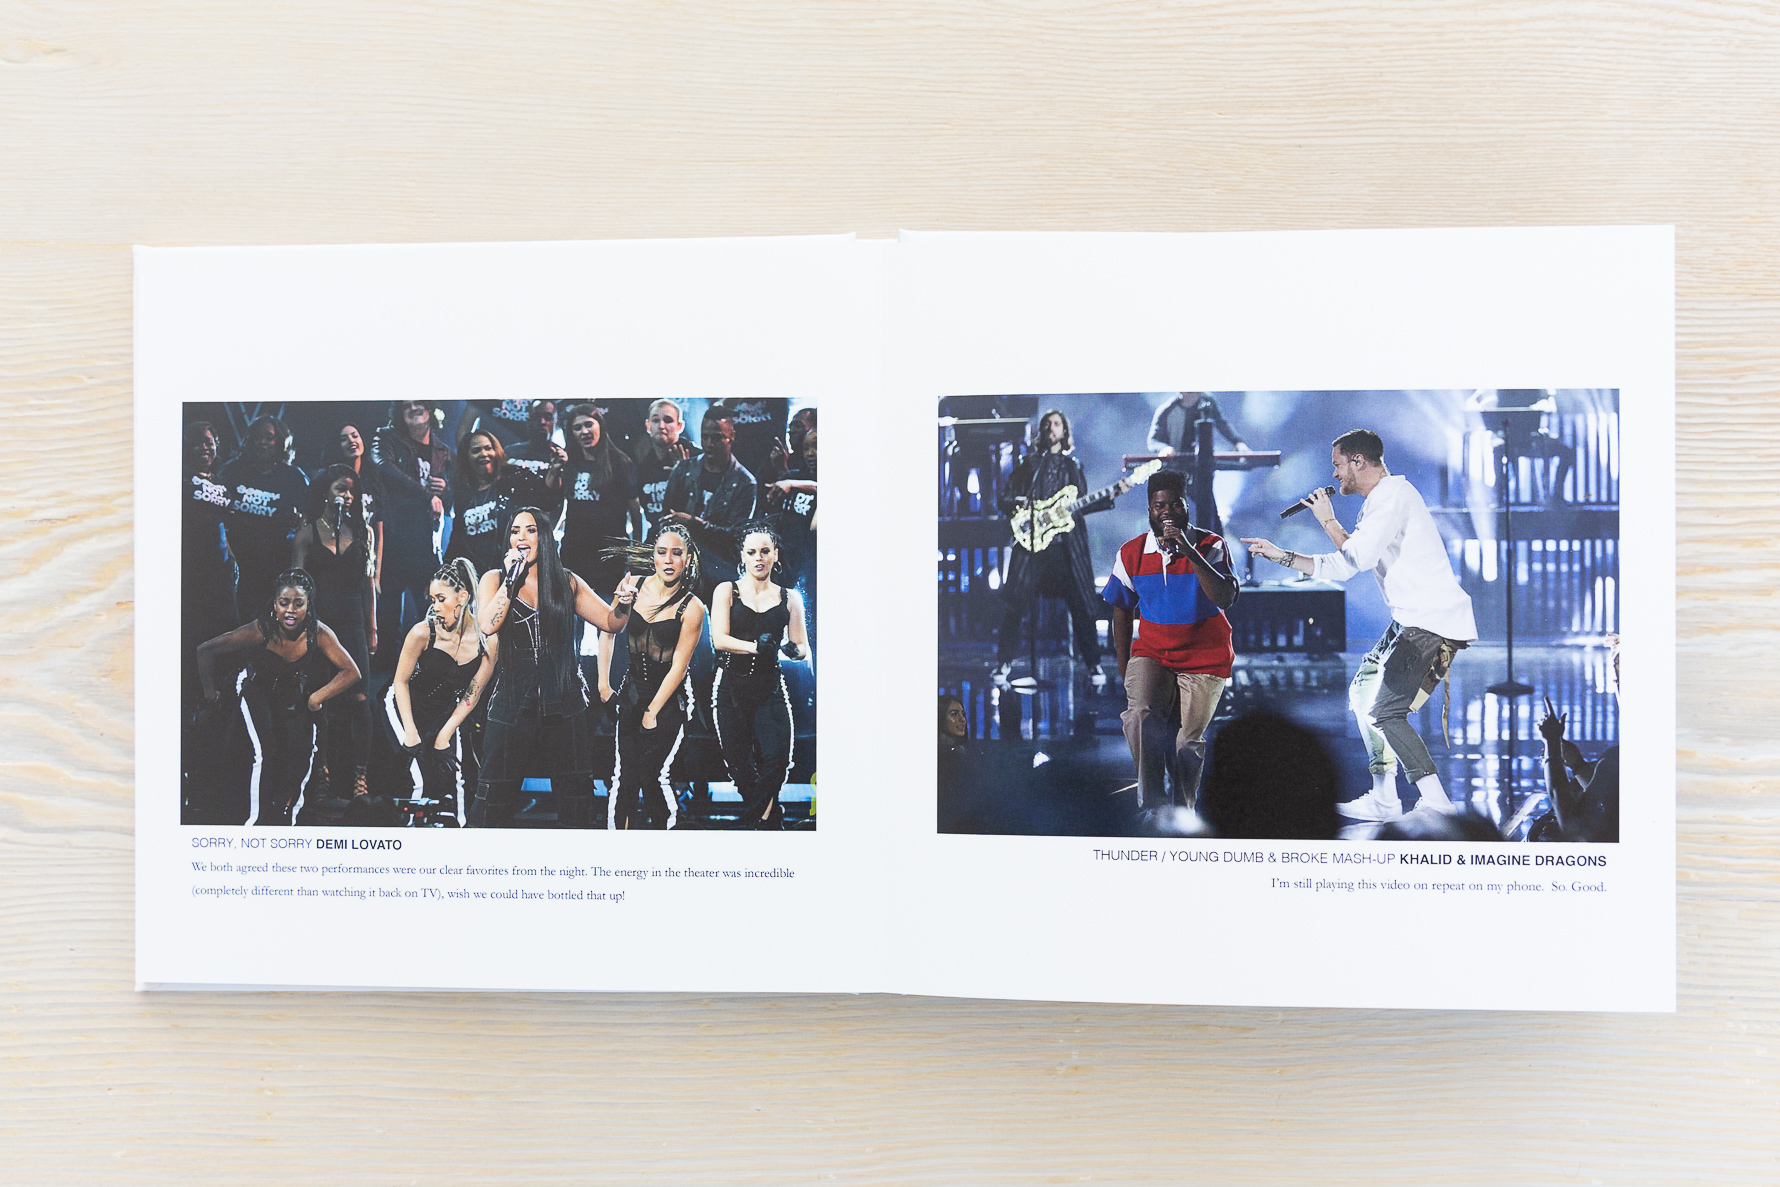 American Music Awards Photo Book | Documenting Special Experiences | suzanneobrienstudio.com